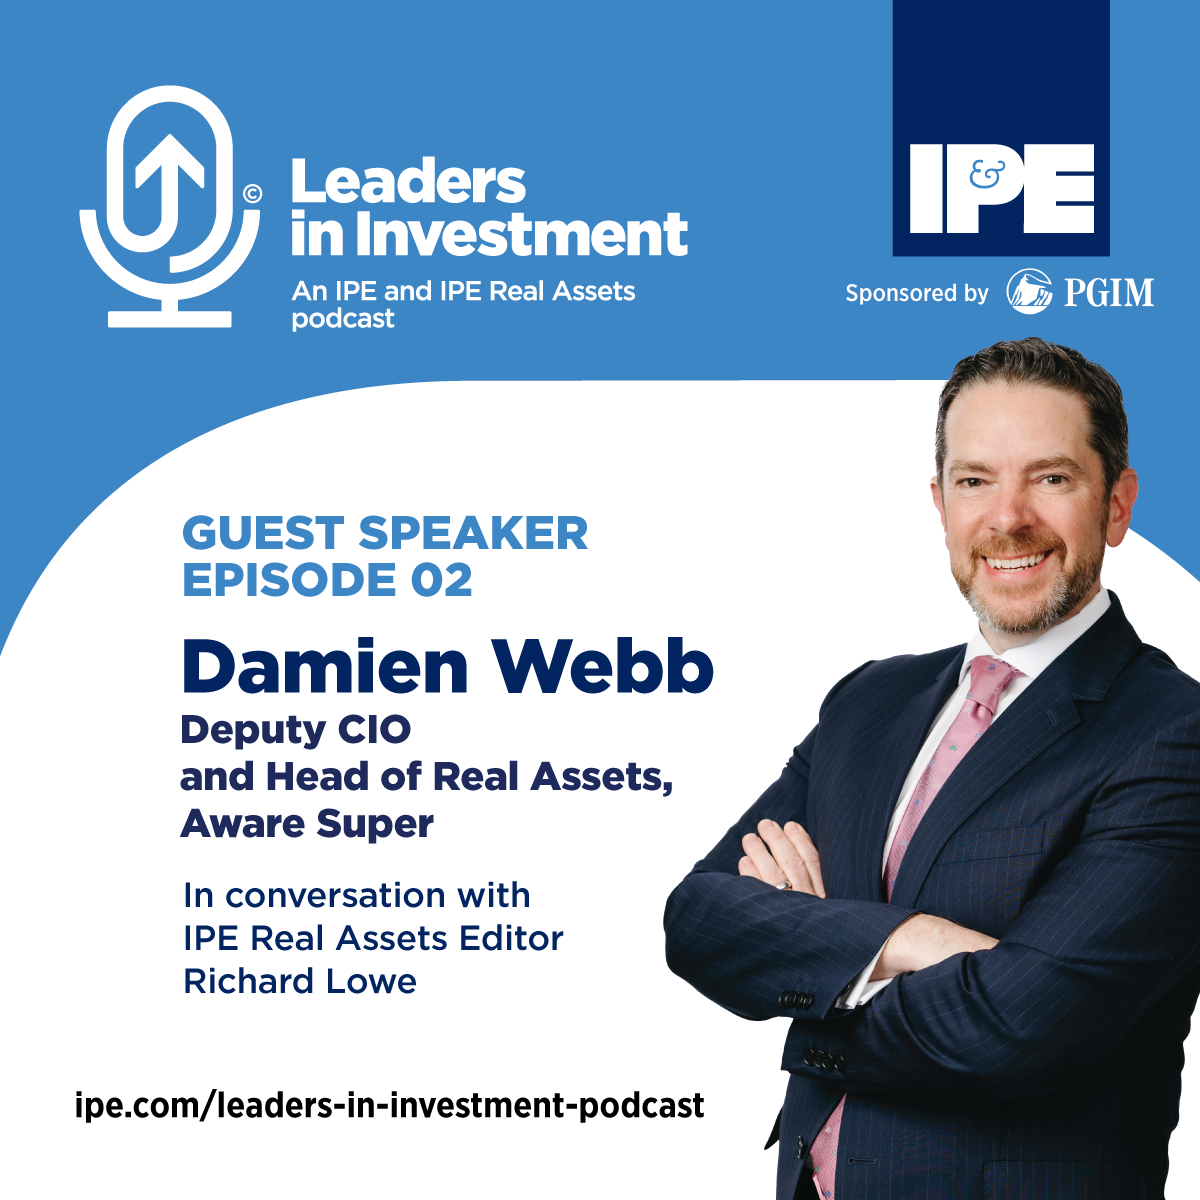 Damien Webb - Deputy CIO and Head of Real Assets, Aware Super